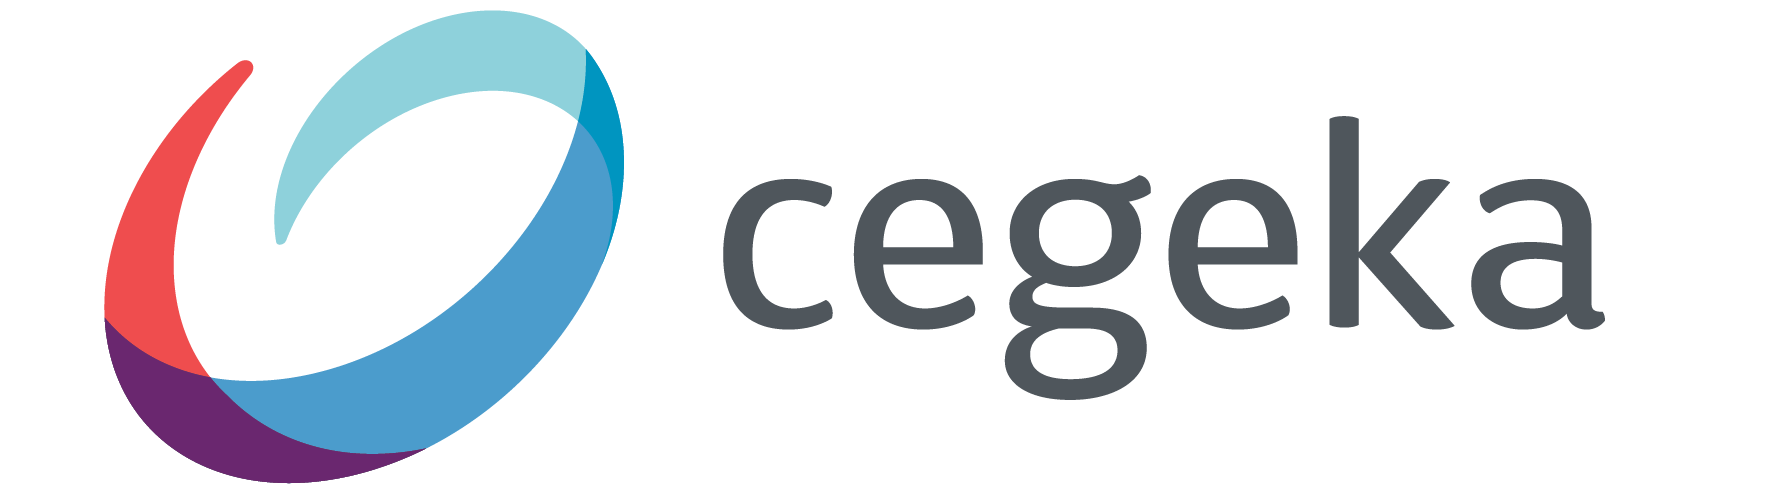 Cegeka - A Mobile WMS Partner